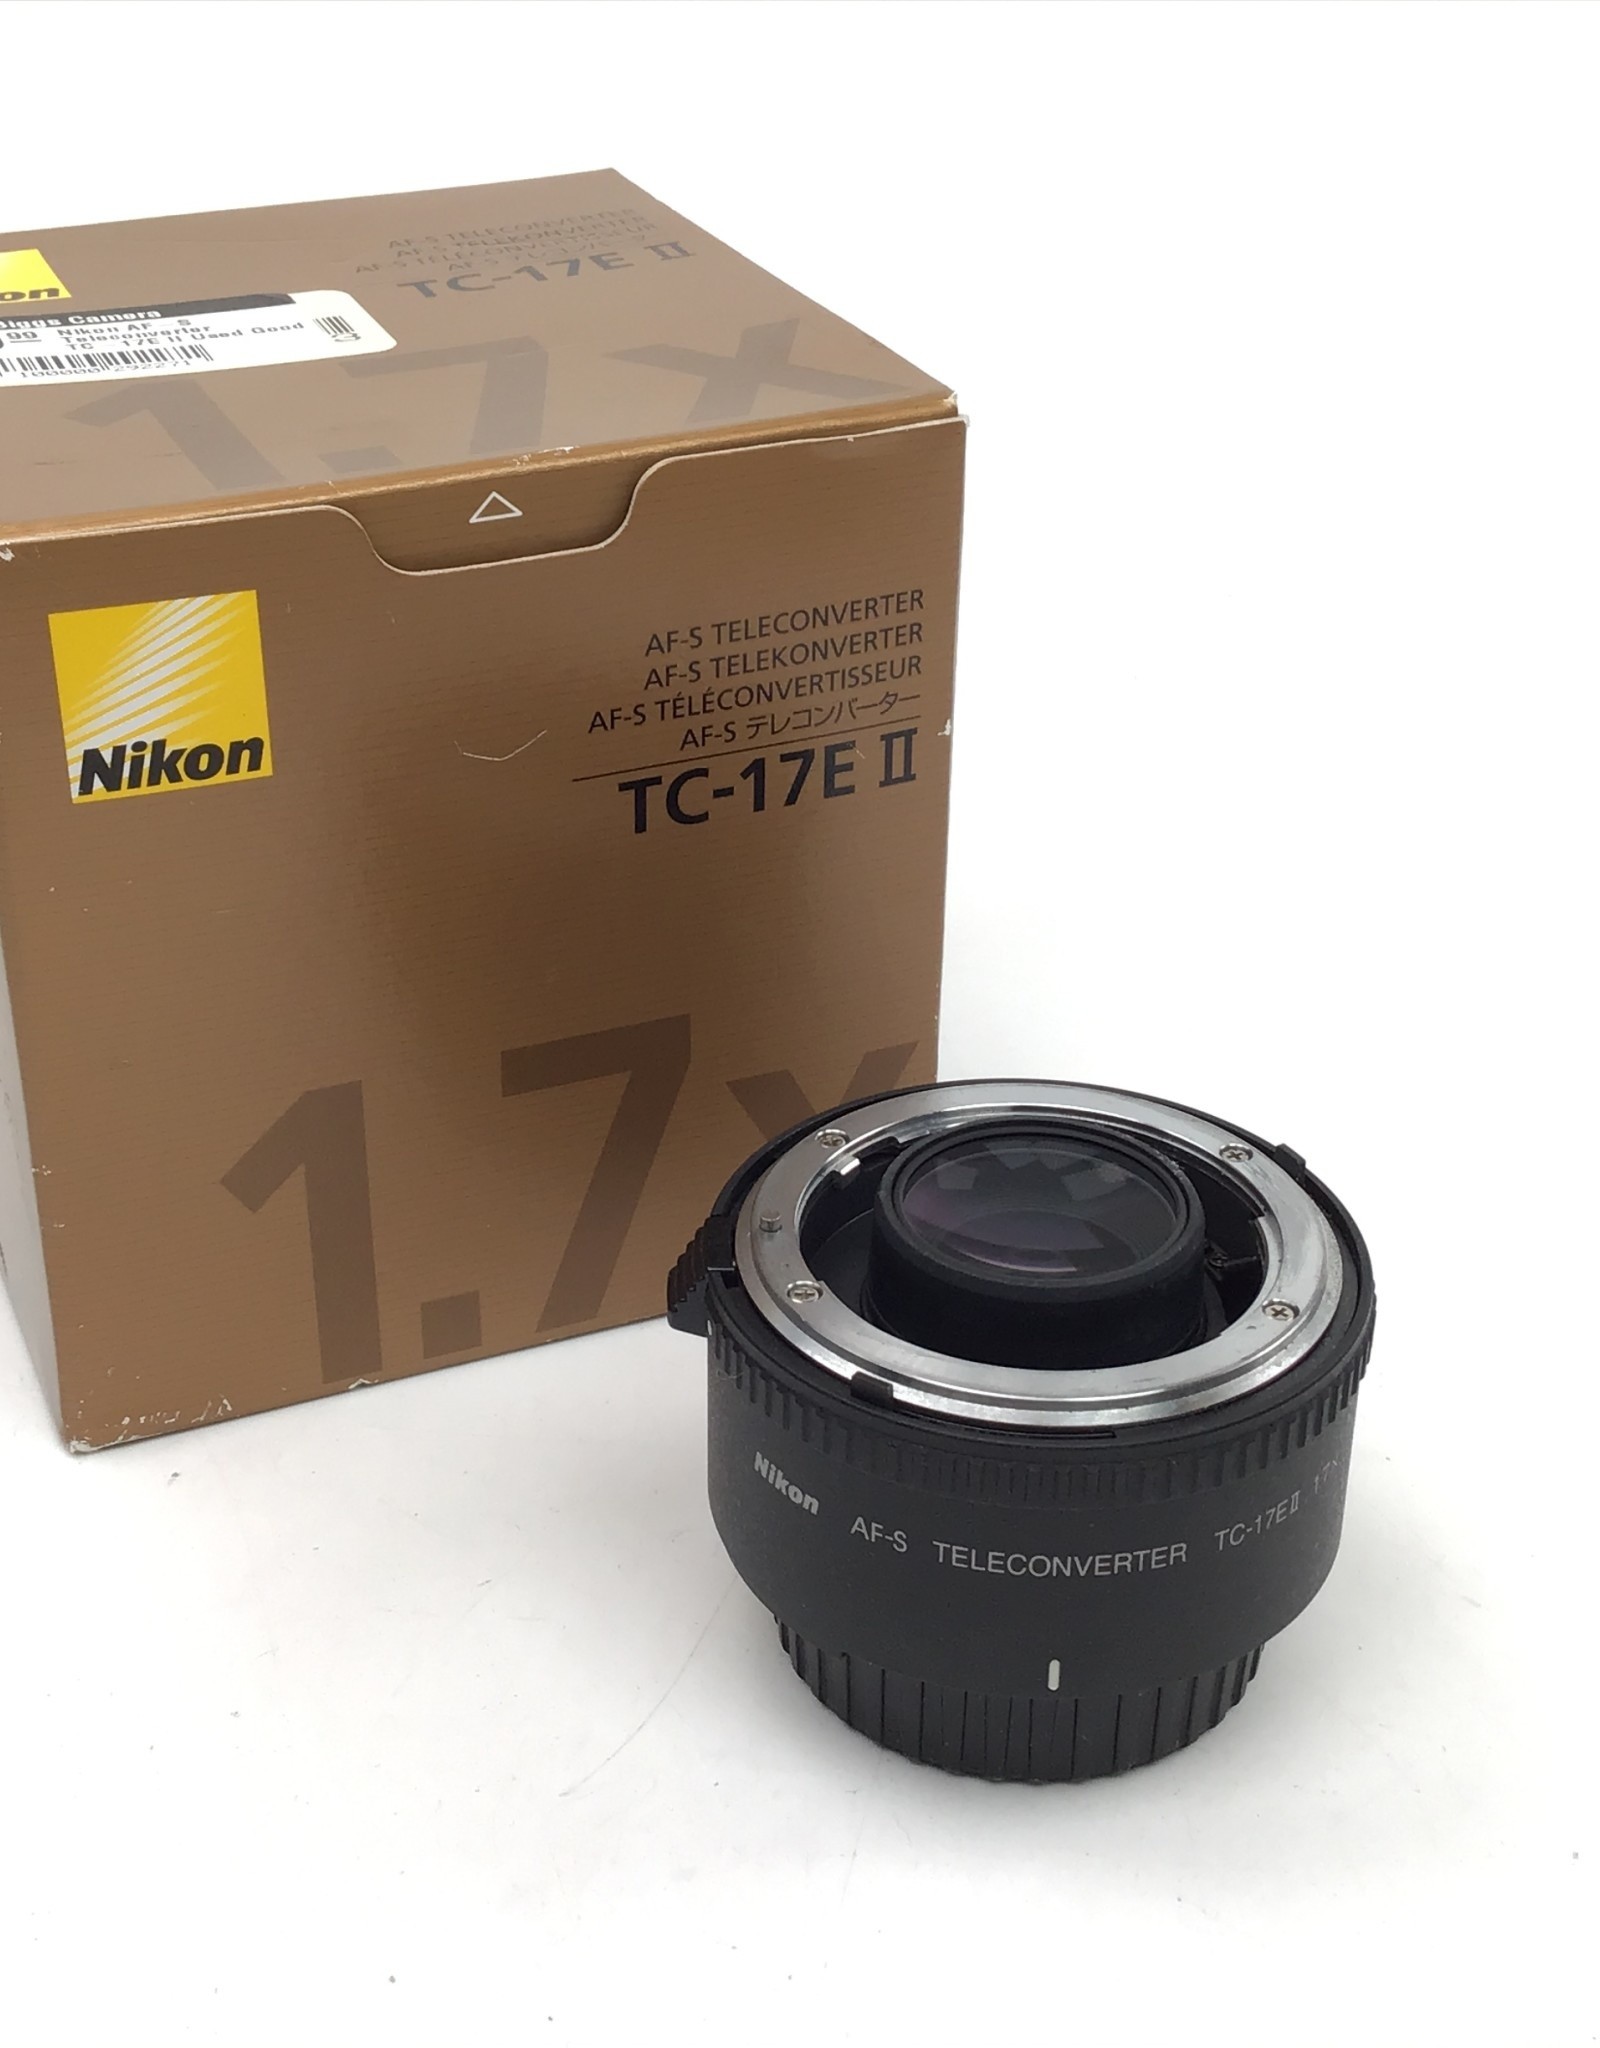 NIKON Nikon AF-S Teleconverter TC-17E II Used Good